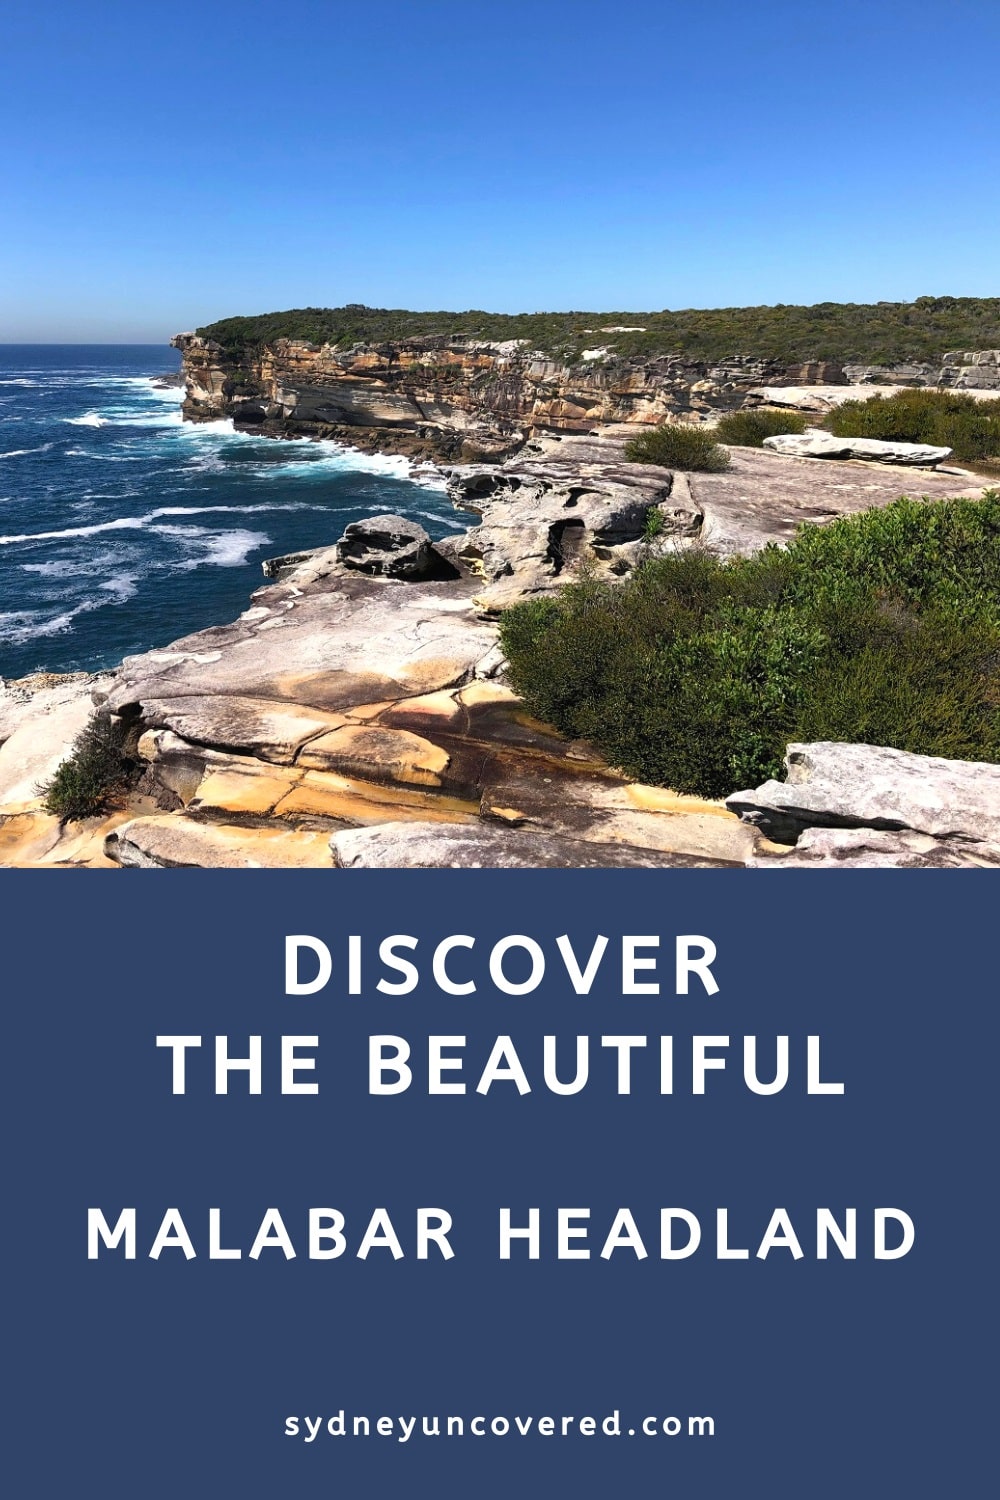 Discover the Malabar Headland